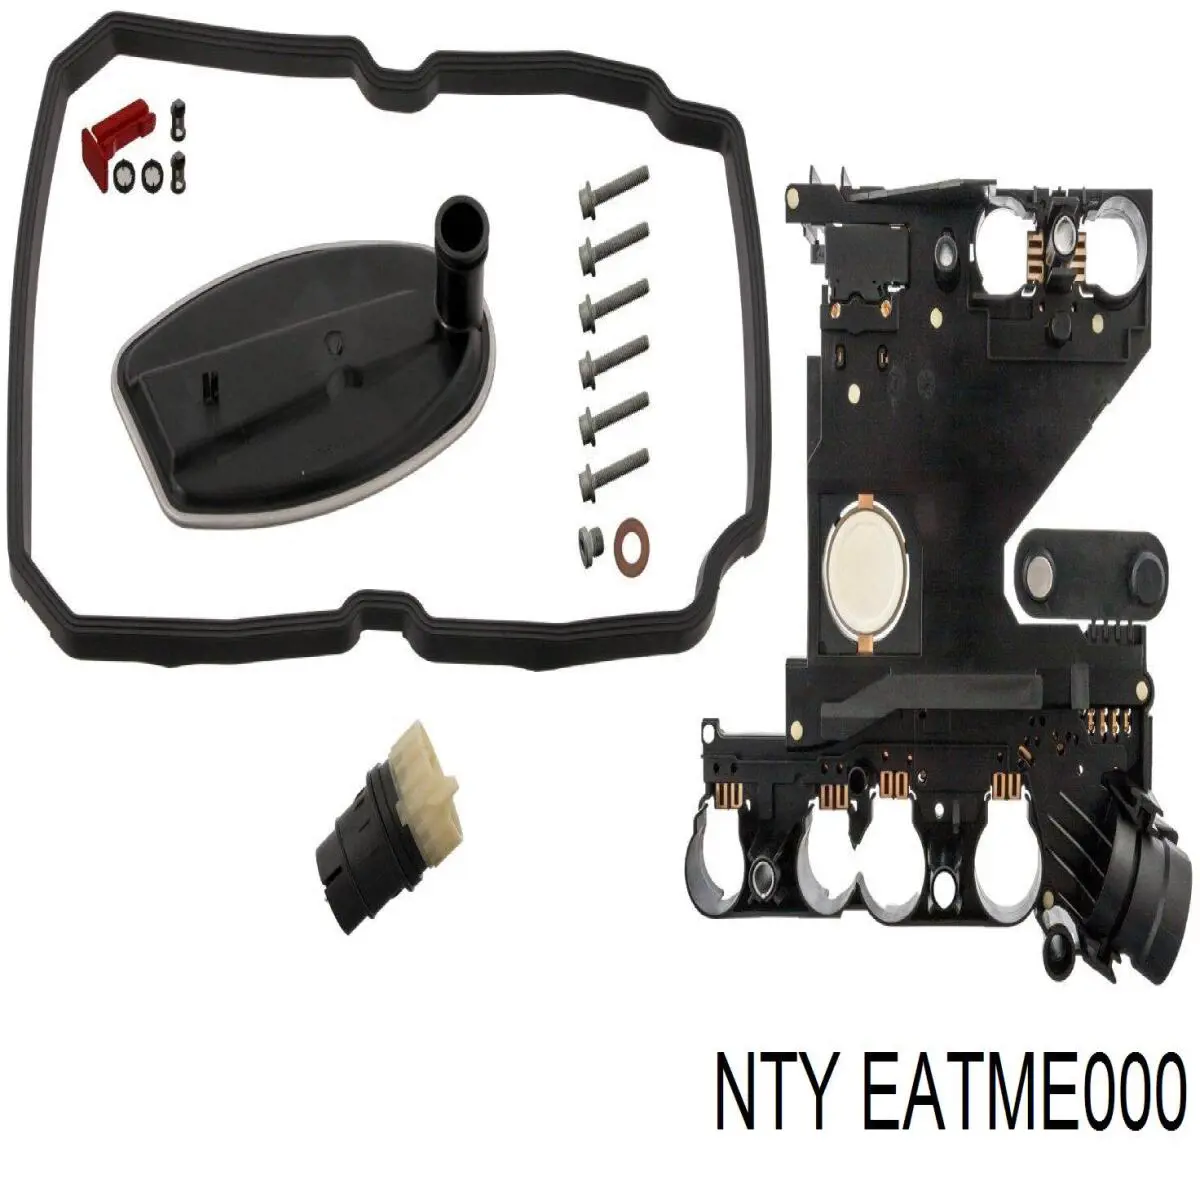 EAT-ME-000 NTY bloque de la valvula de transmision automatica